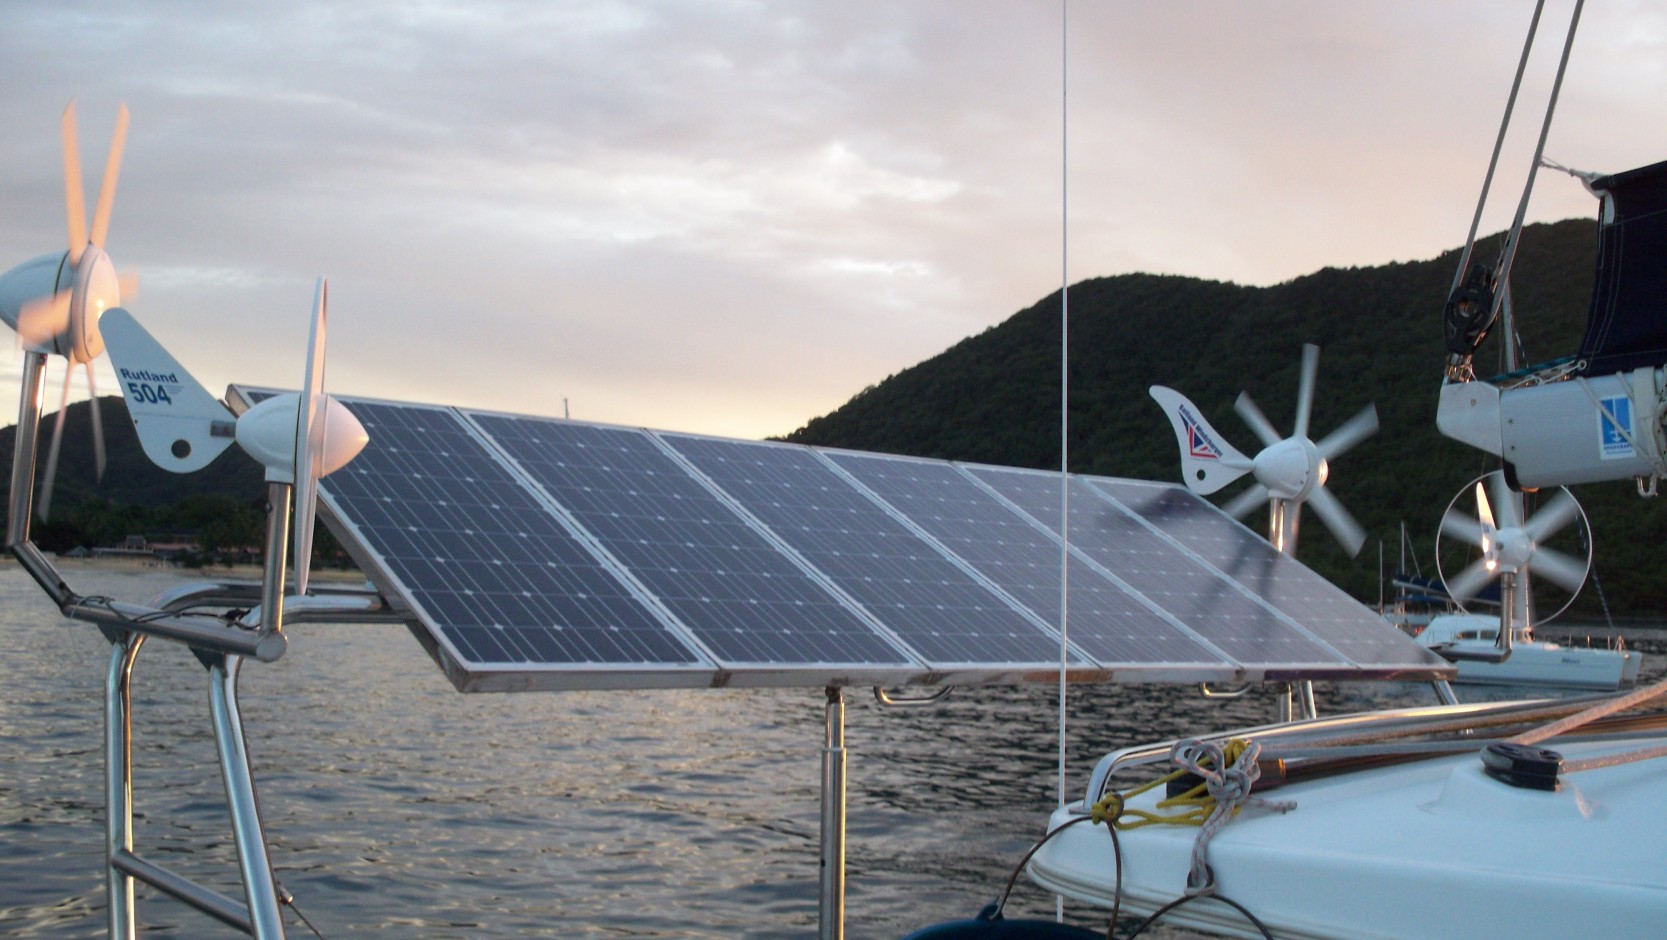 sailboat solar systems